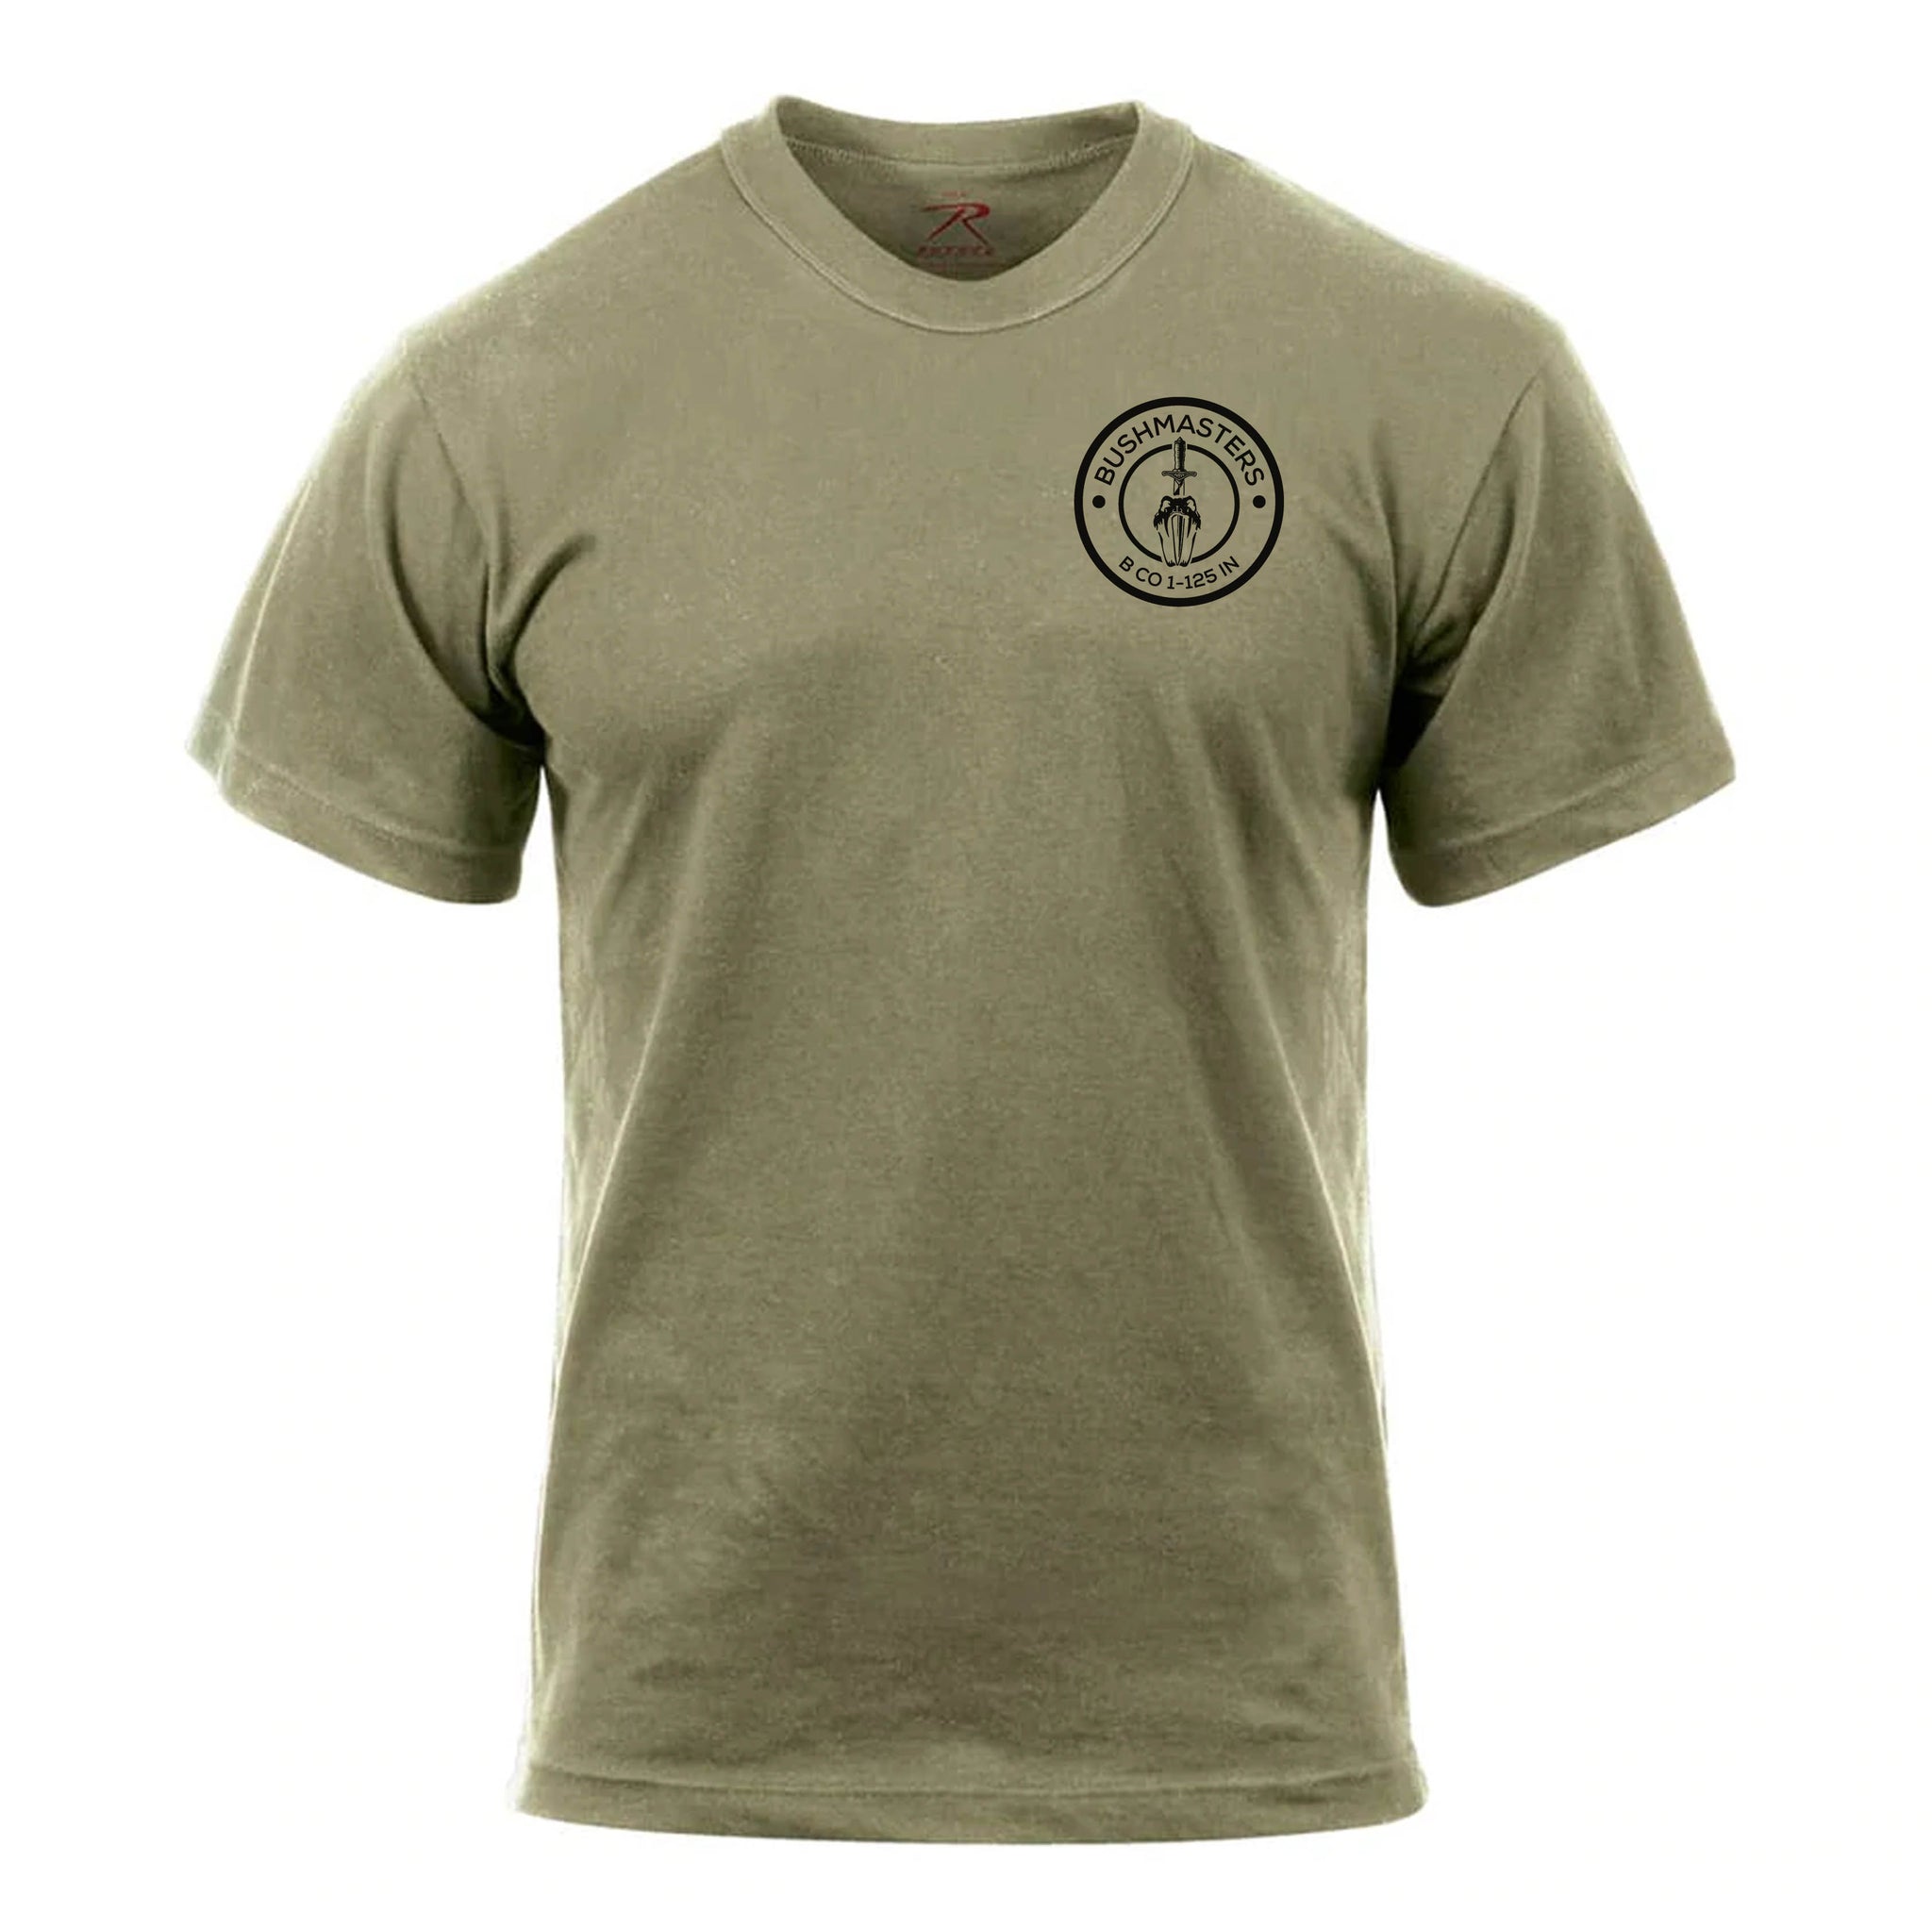 1-125 IN BN Bushmaster Shirt